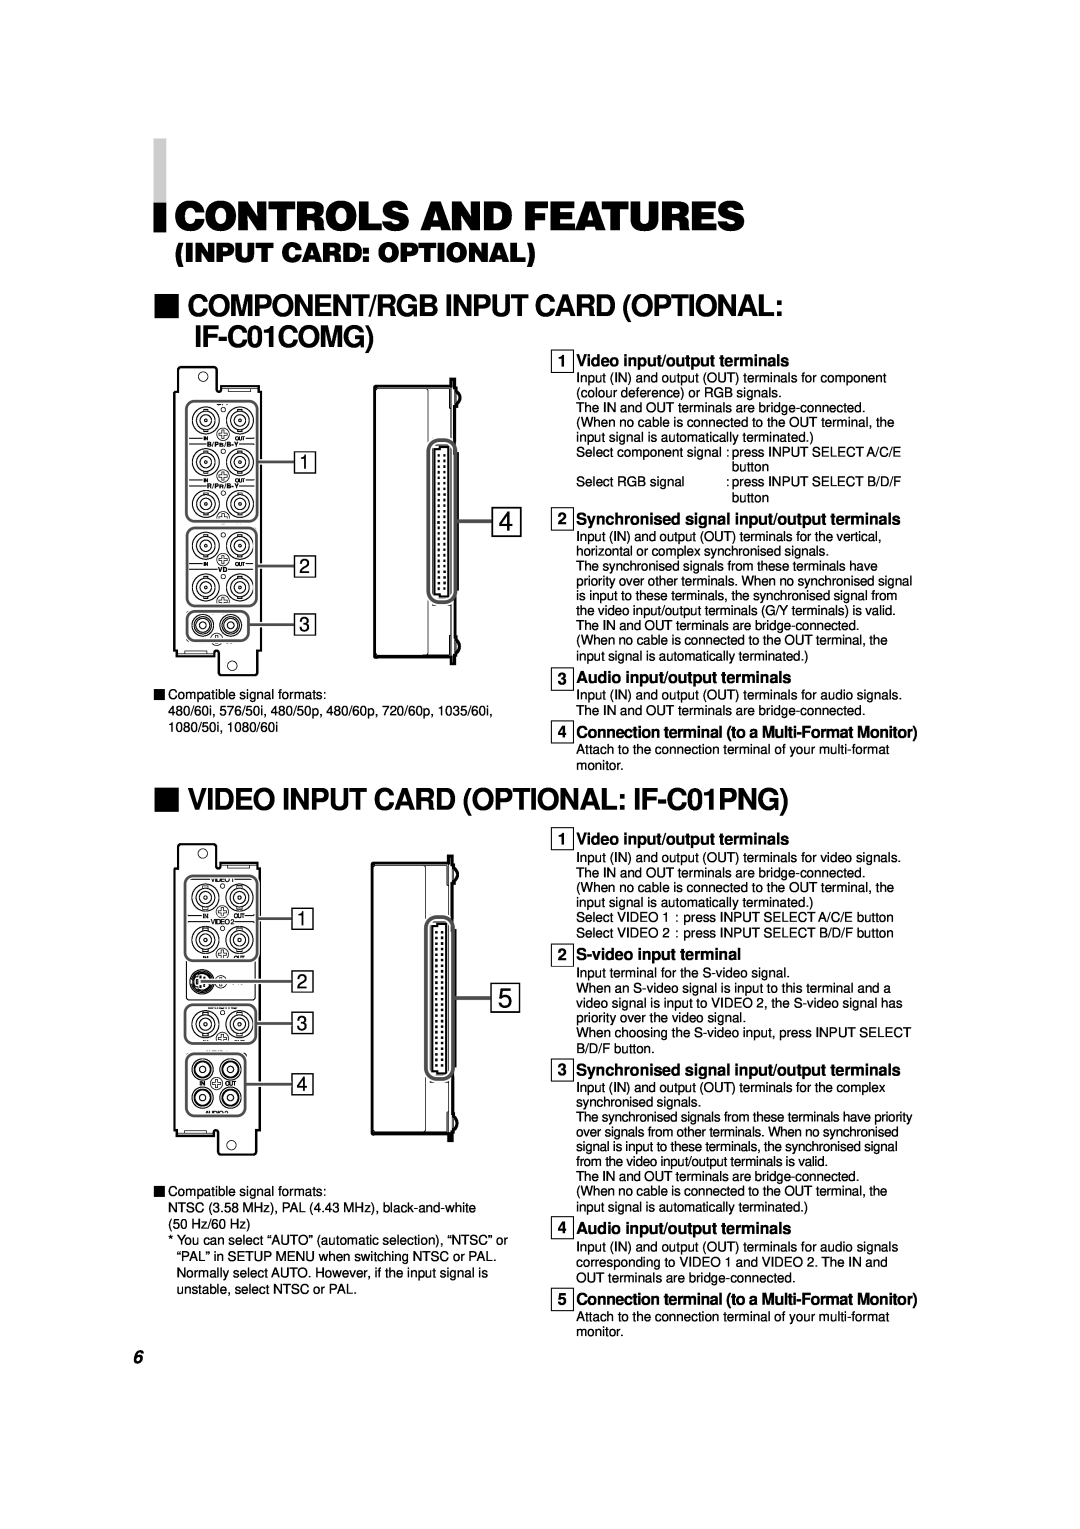 JVC V1700CG  COMPONENT/RGB INPUT CARD OPTIONAL IF-C01COMG,  VIDEO INPUT CARD OPTIONAL IF-C01PNG, Input Card Optional 